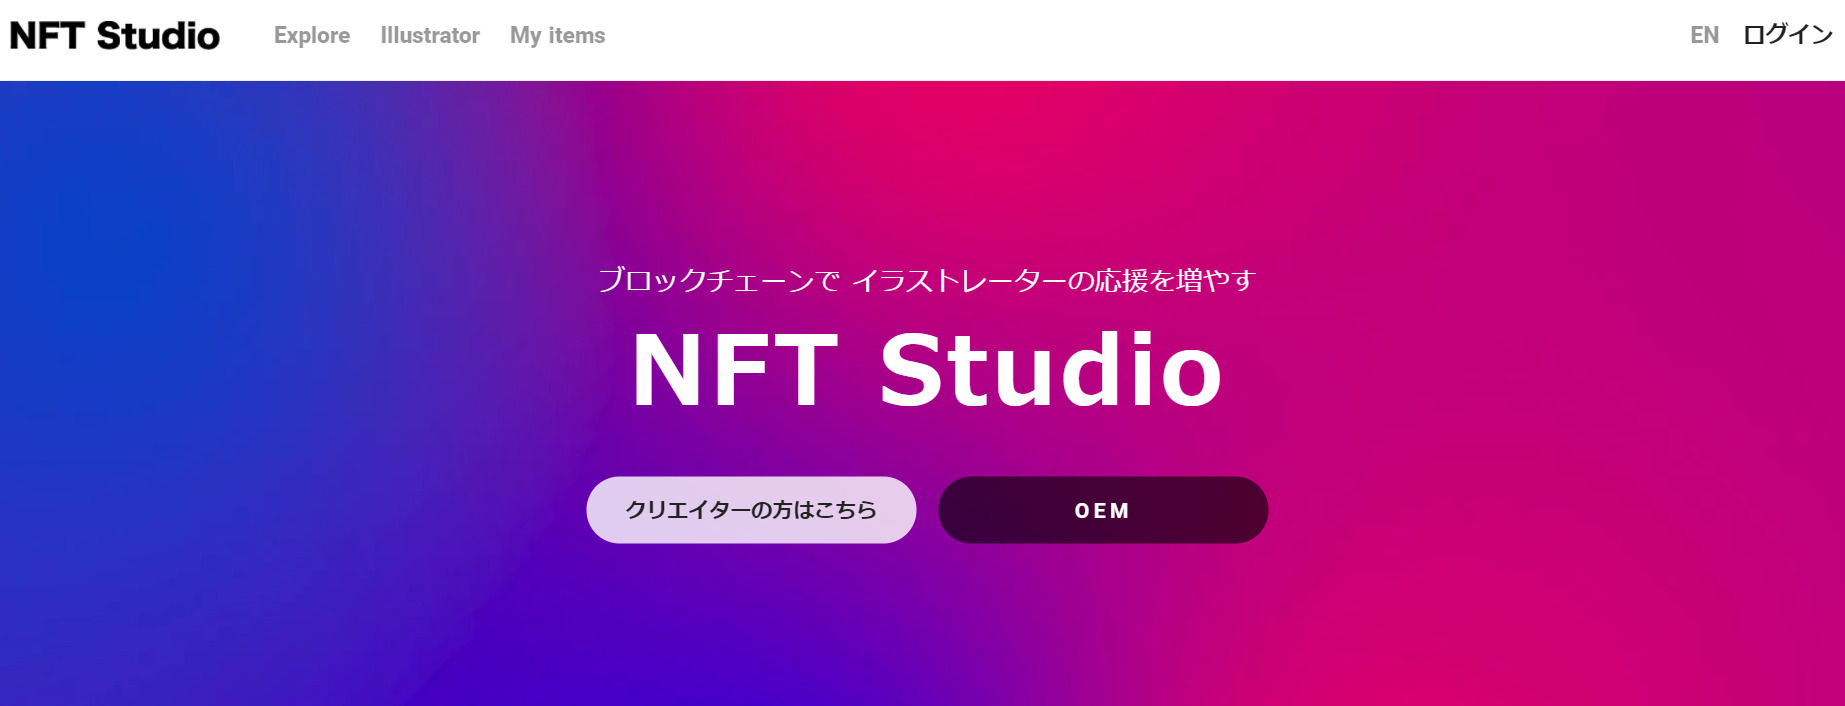 NFTStudio_nft_marketplace